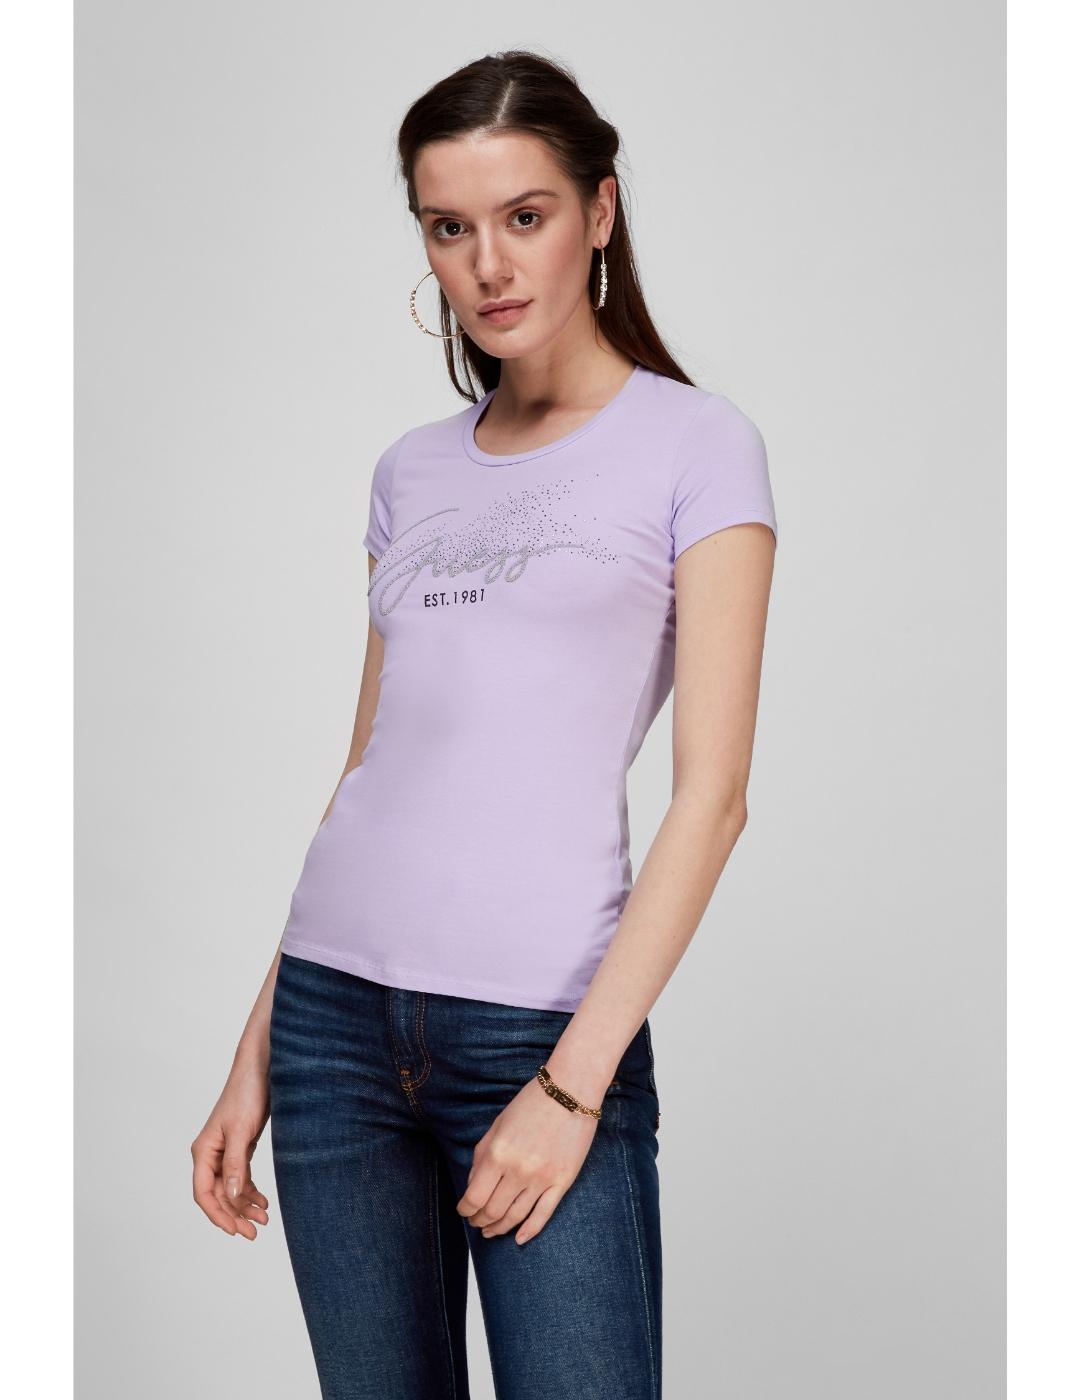 Camiseta Guess Chloe morada para mujer